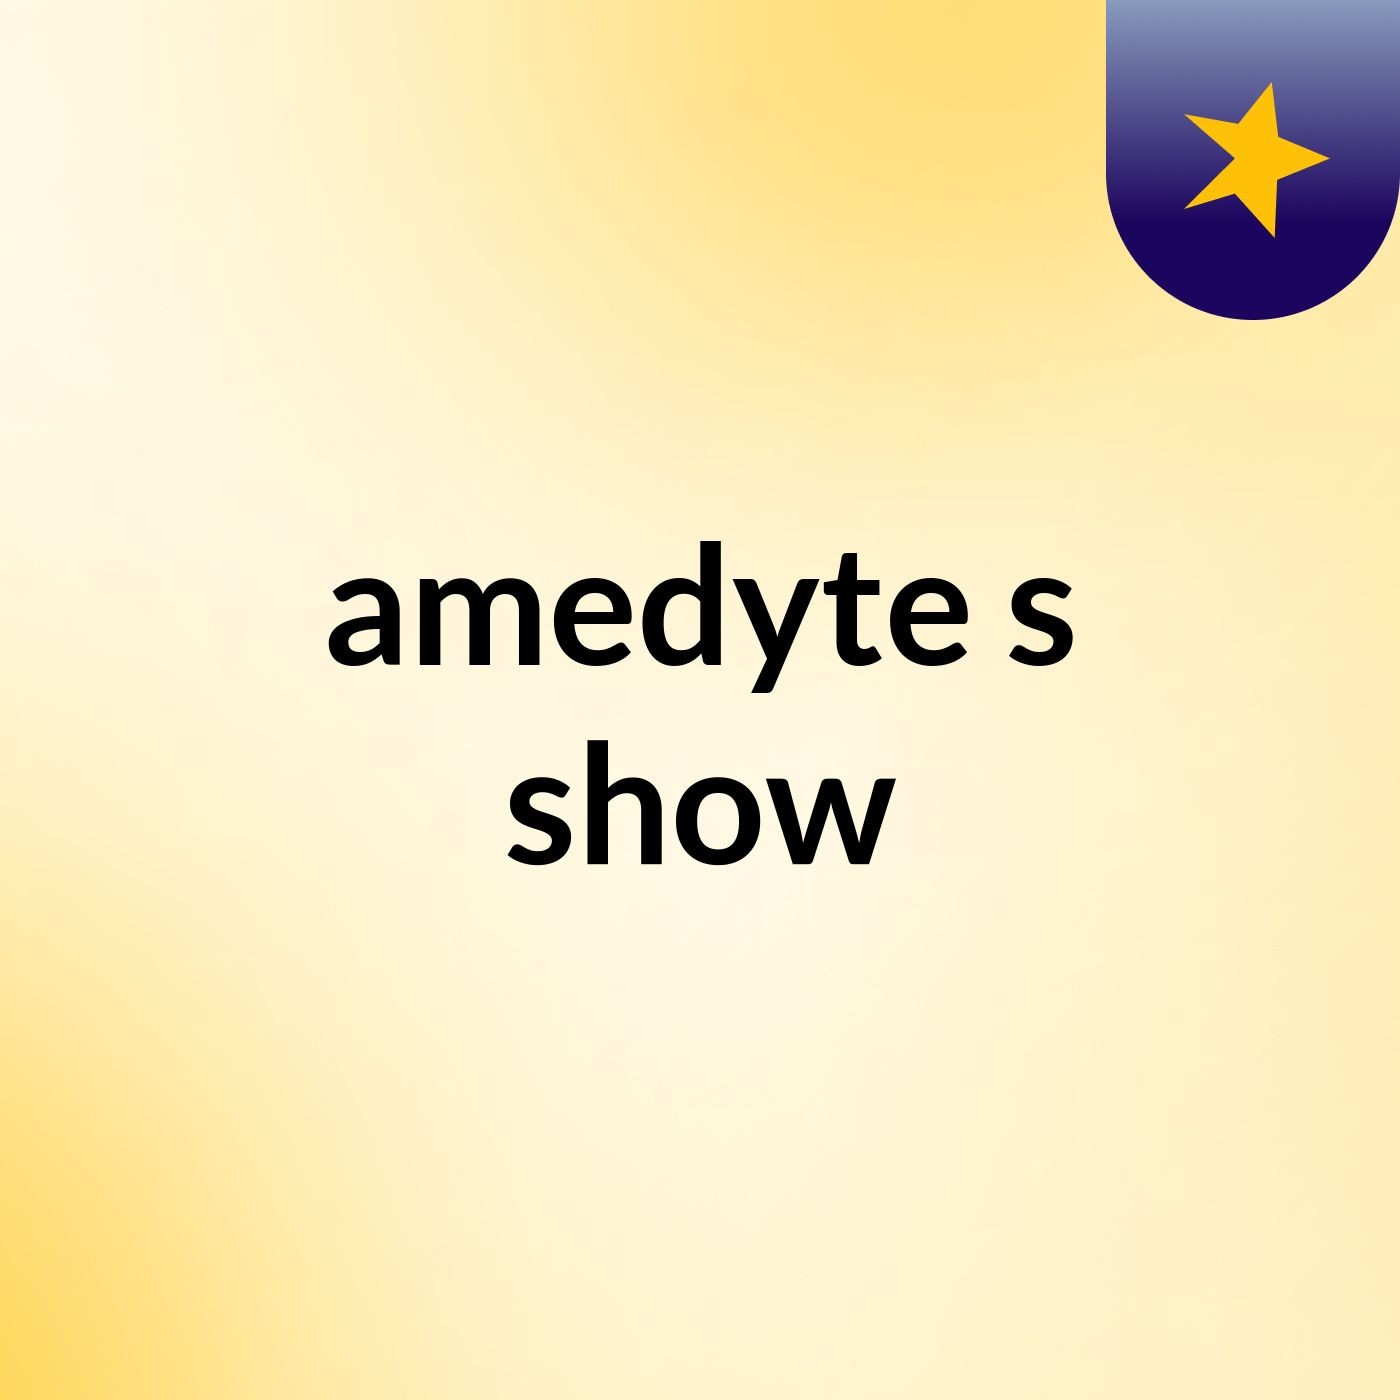 amedyte's show